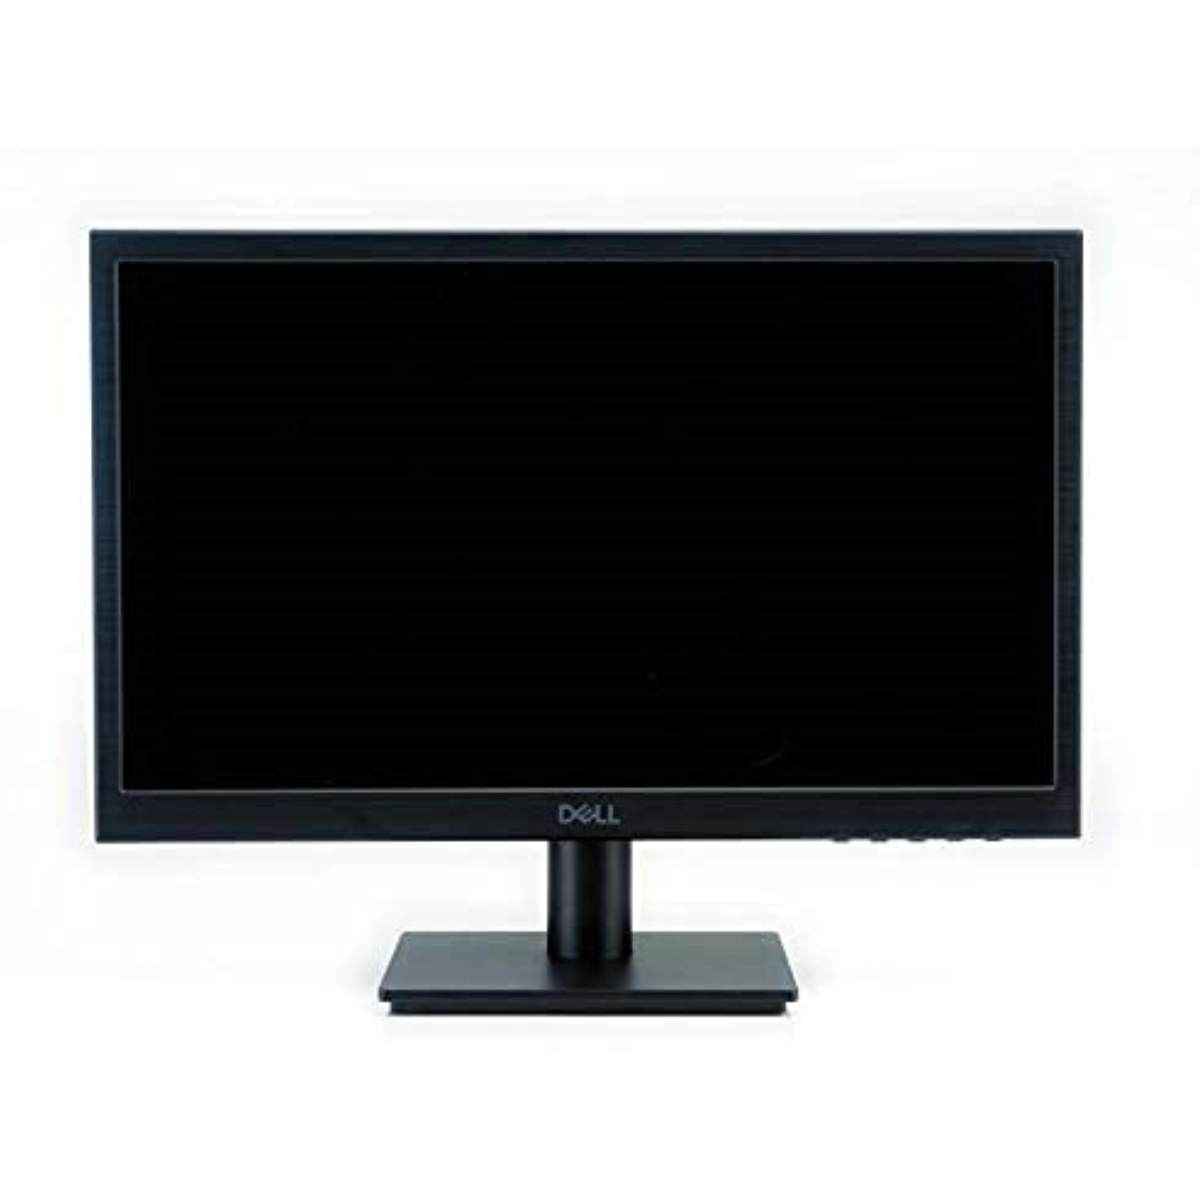 डेल D1918H 18.5-inch LCD Monitor 